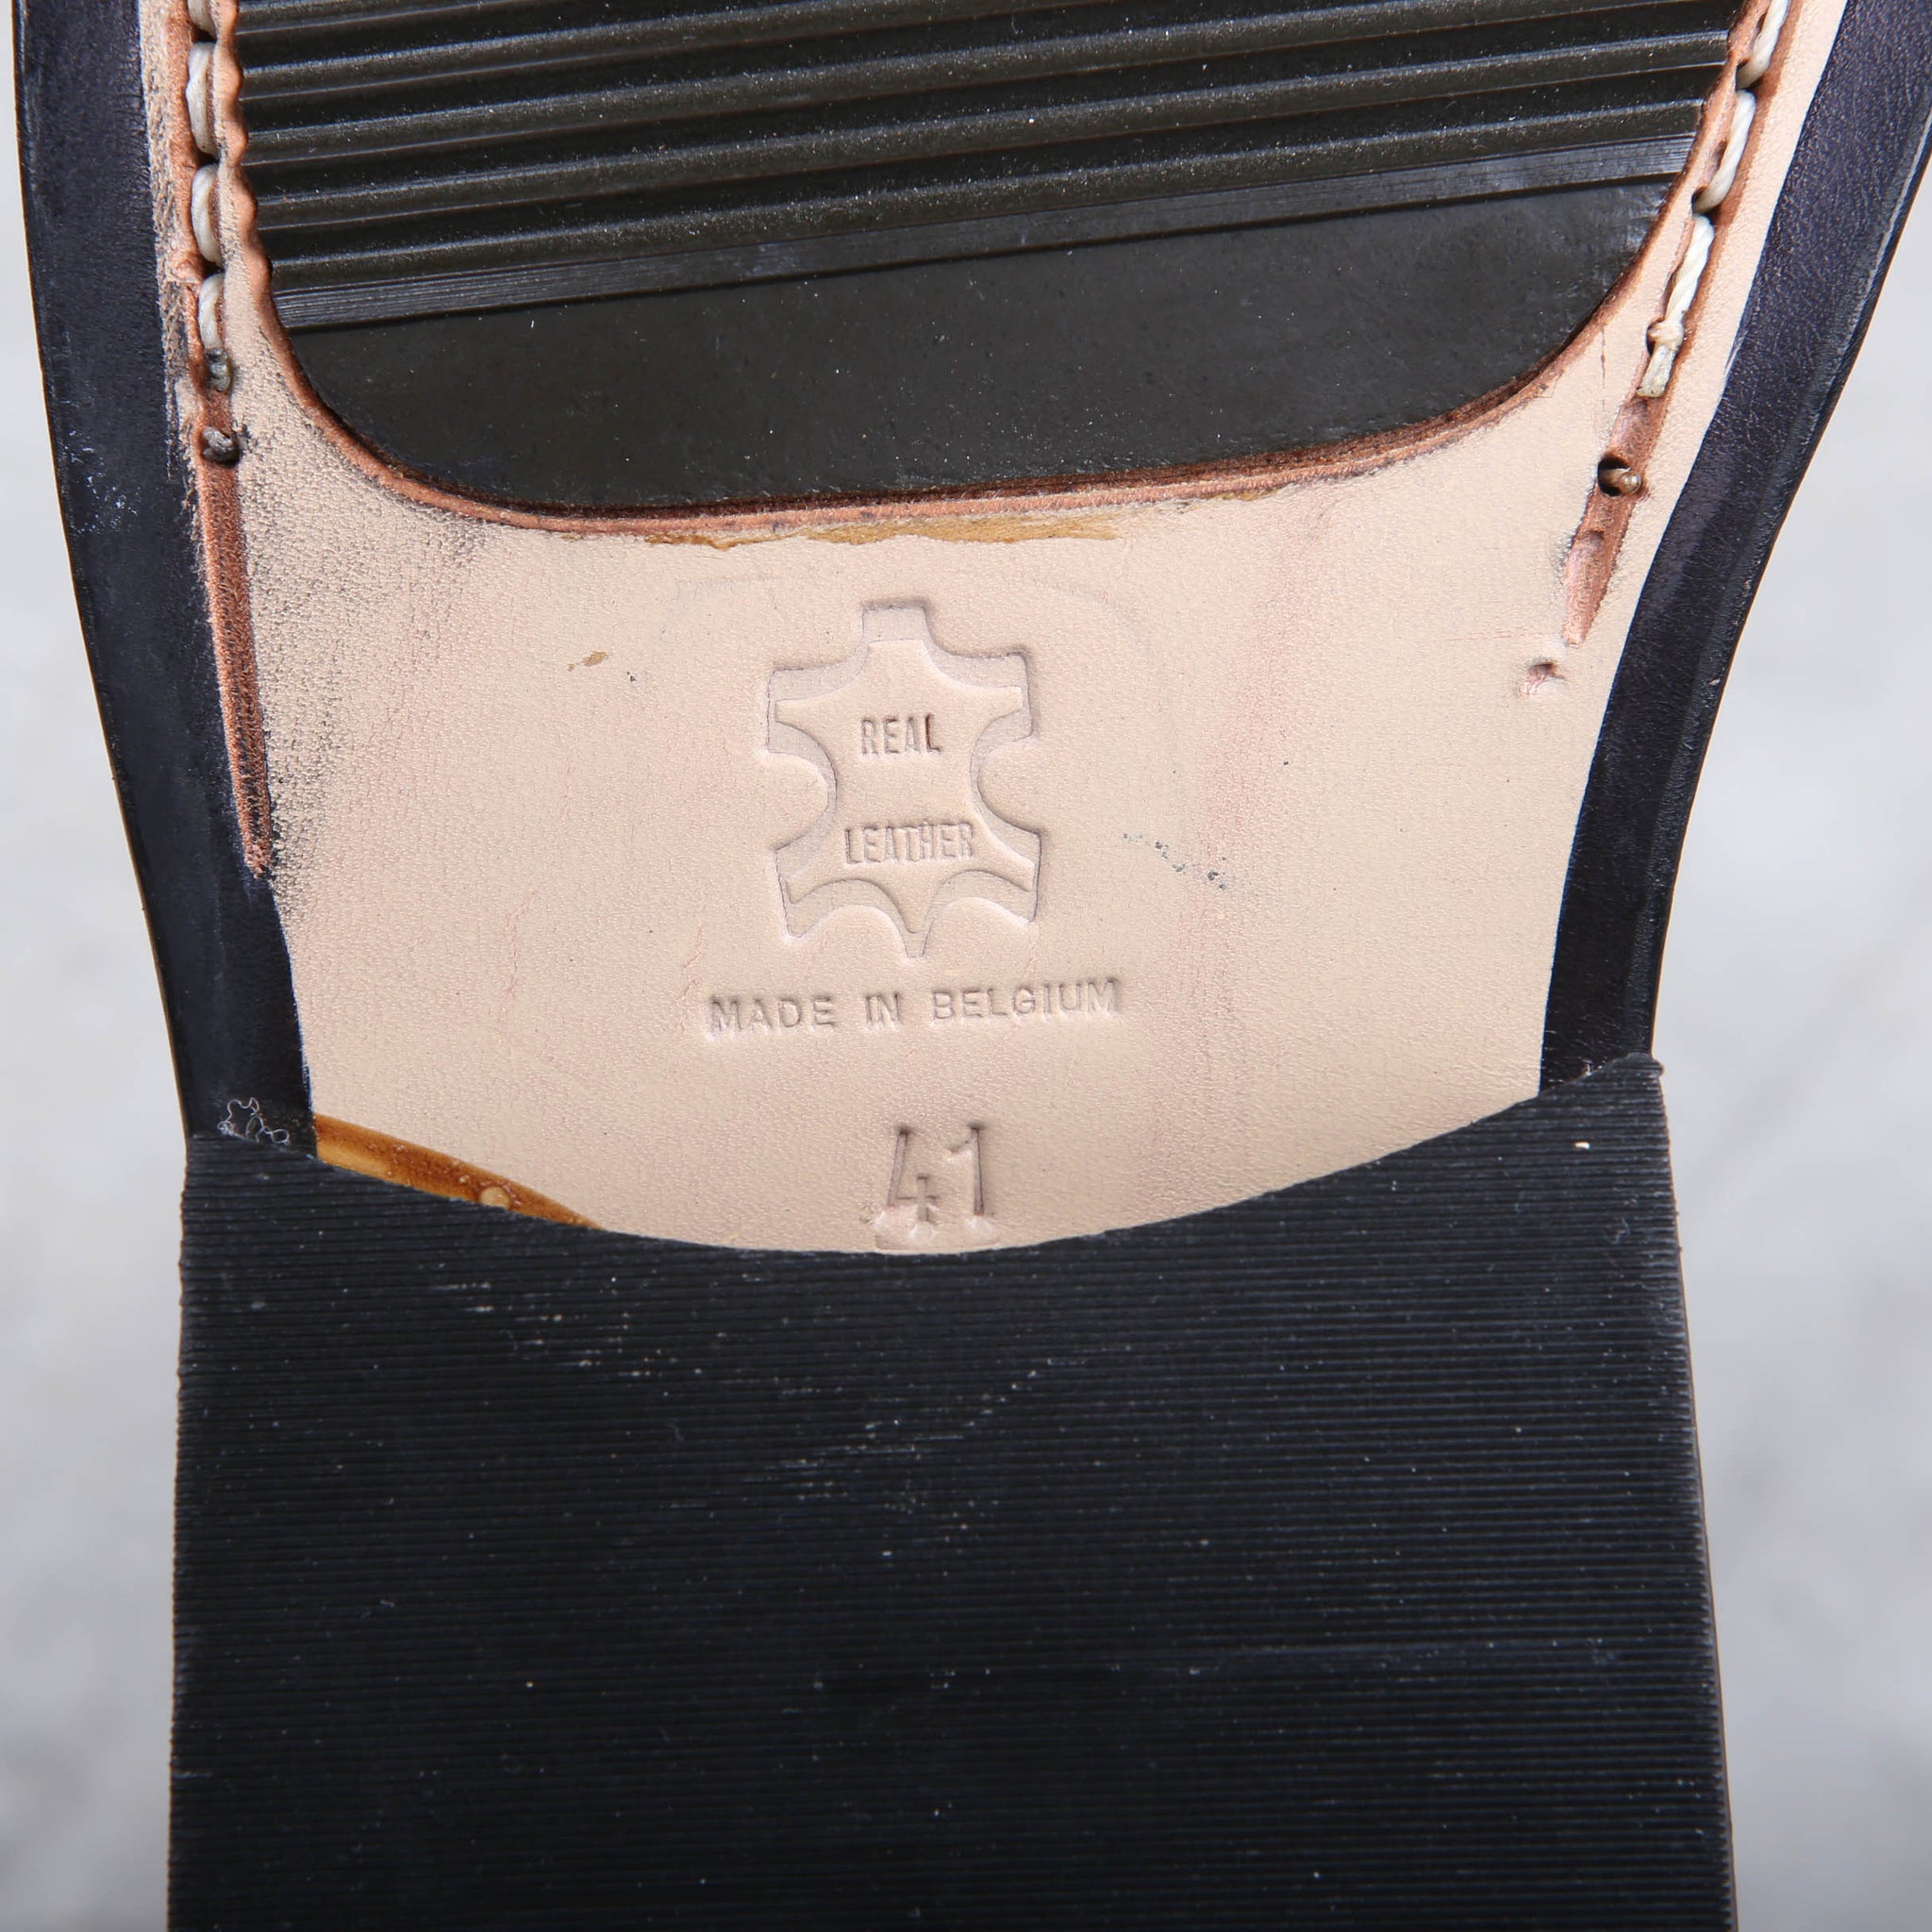 Dirk Bikkembergs Boots Steel cut Knee-High With metal Hooks